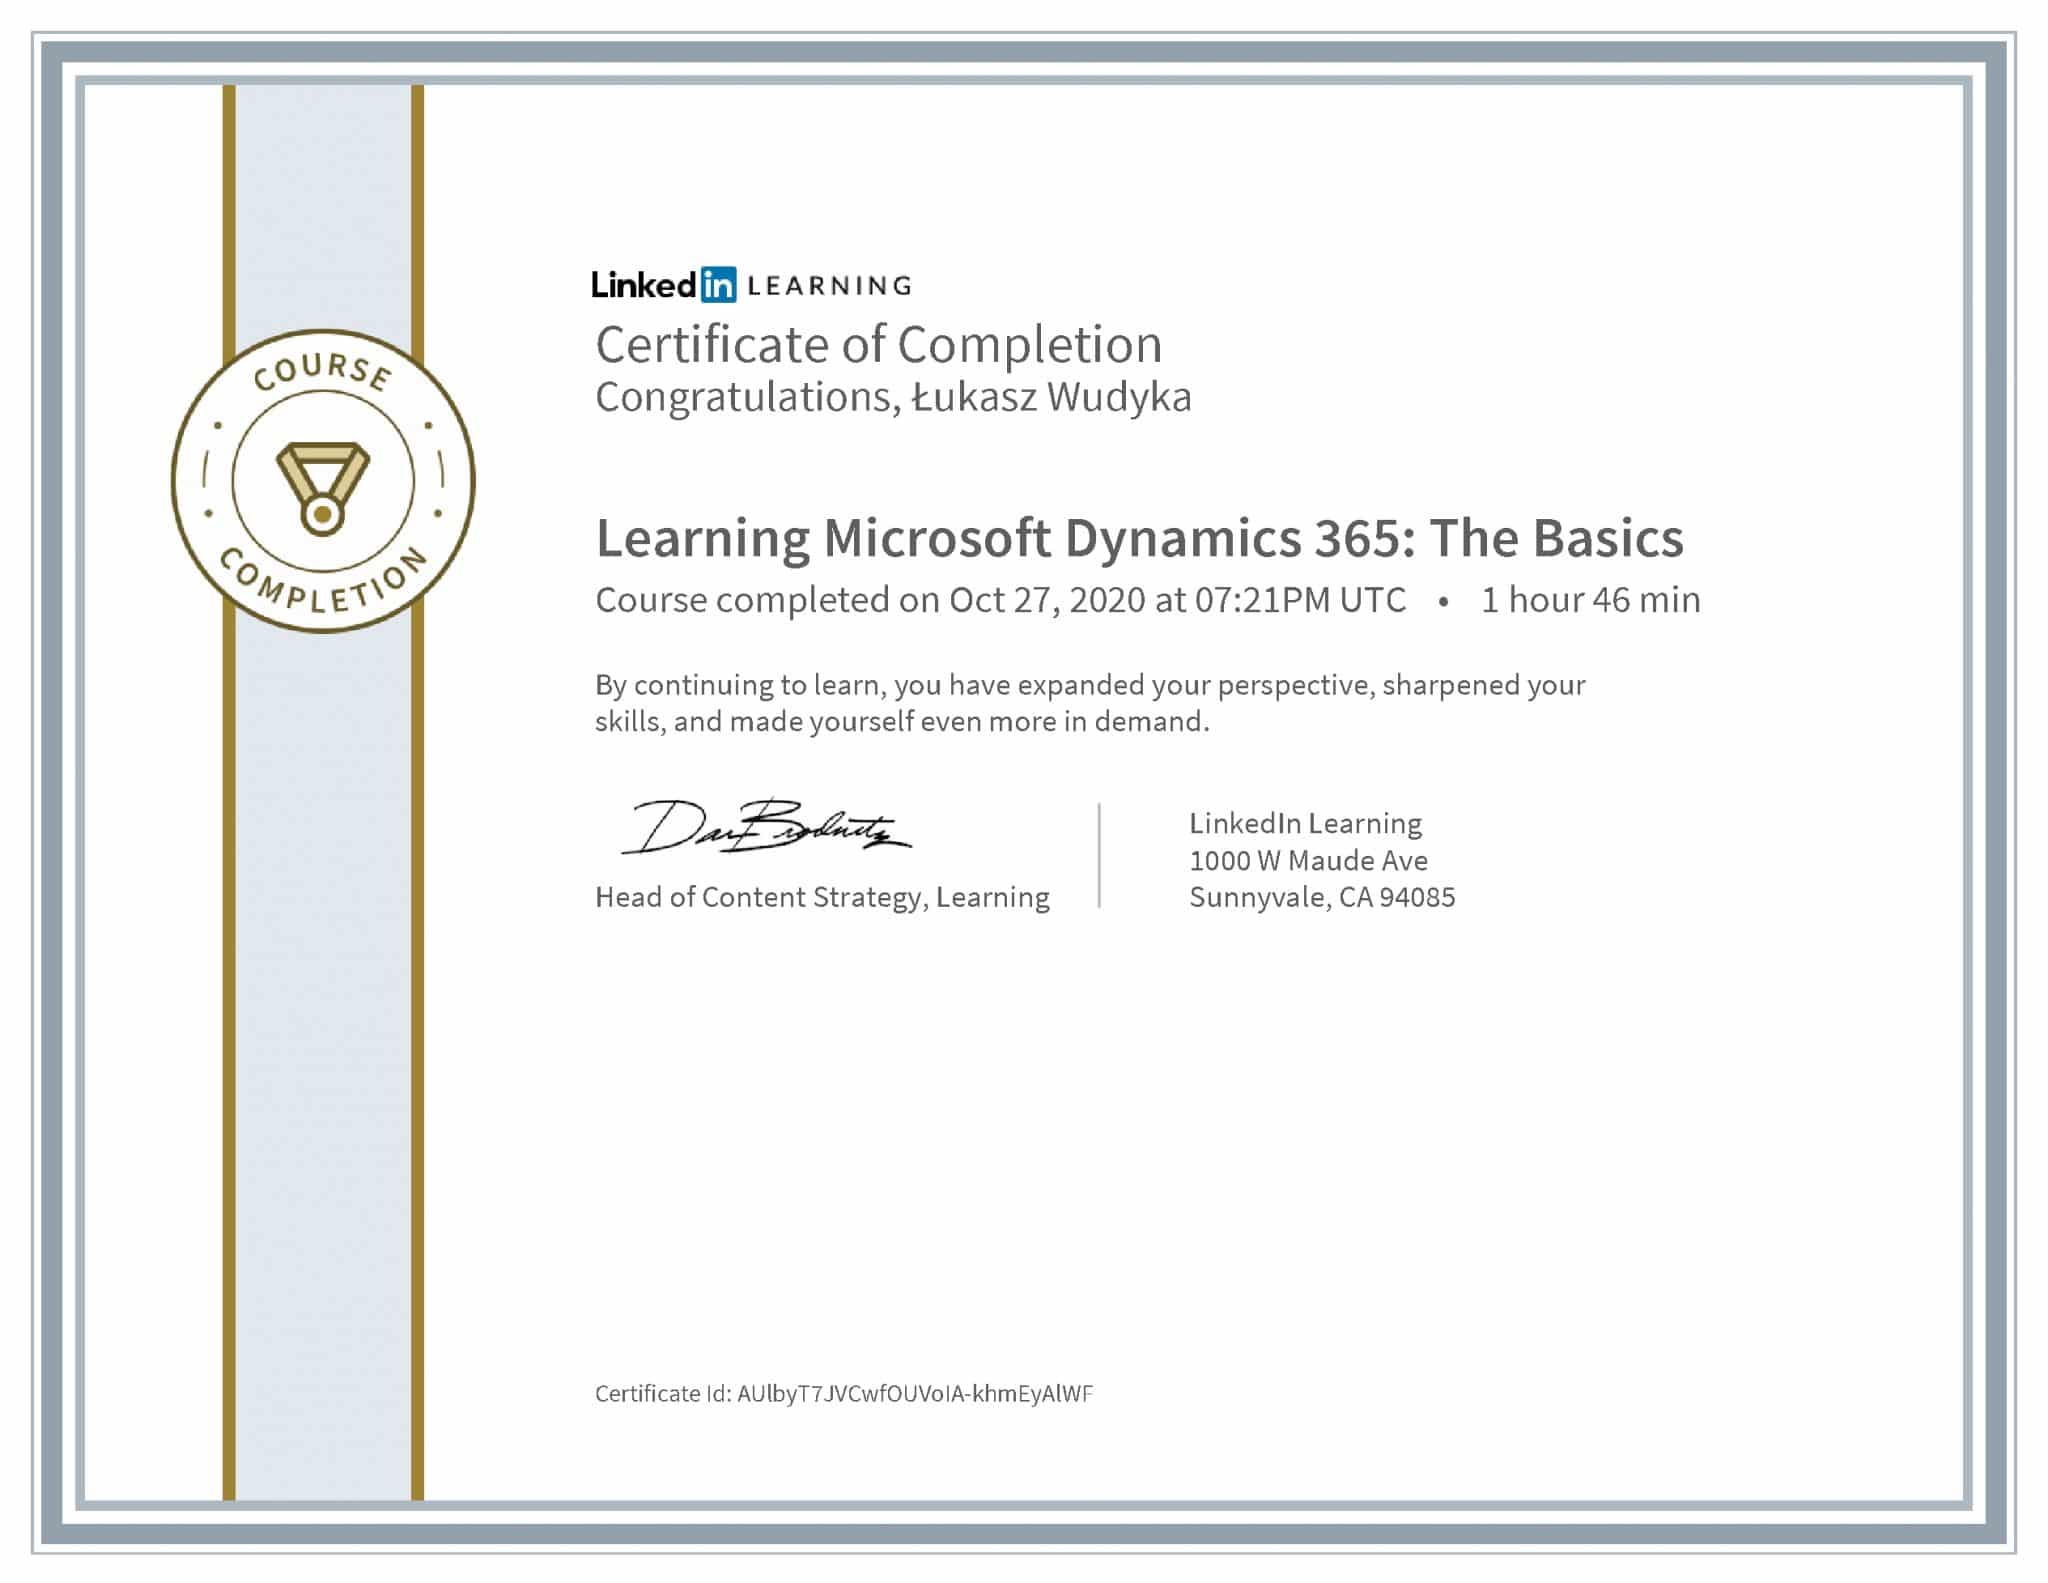 Łukasz Wudyka certyfikat LinkedIn Learning Microsoft Dynamics 365: The Basics